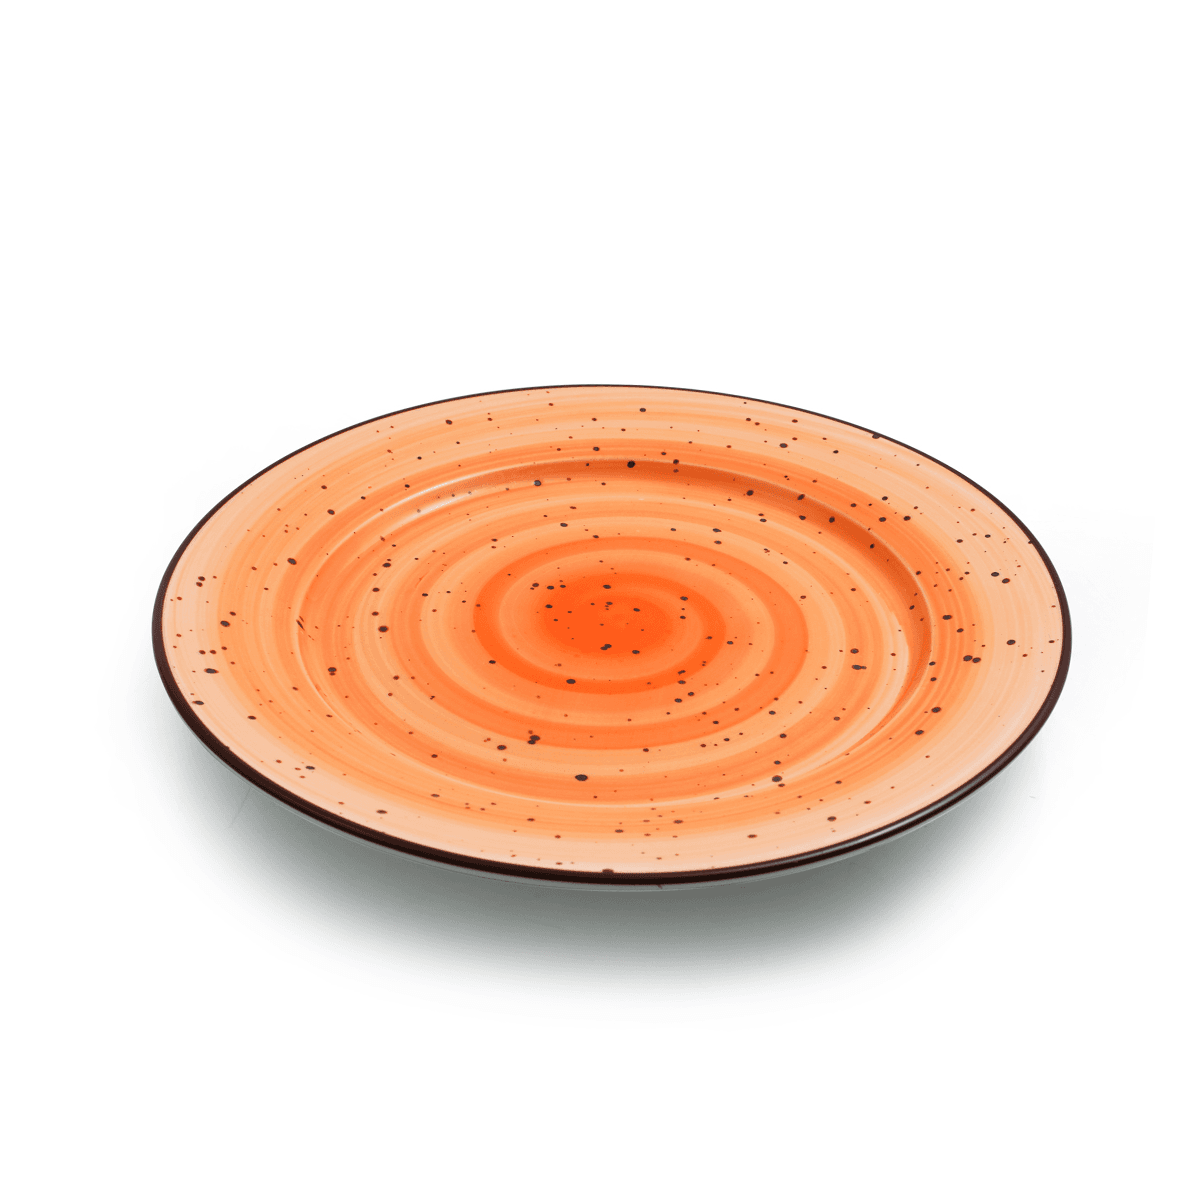 صحن تقديم مسطح بورسلان 12 إنش برتقالي بورسليتا Porceletta Glazed Porcelain Flat Plate